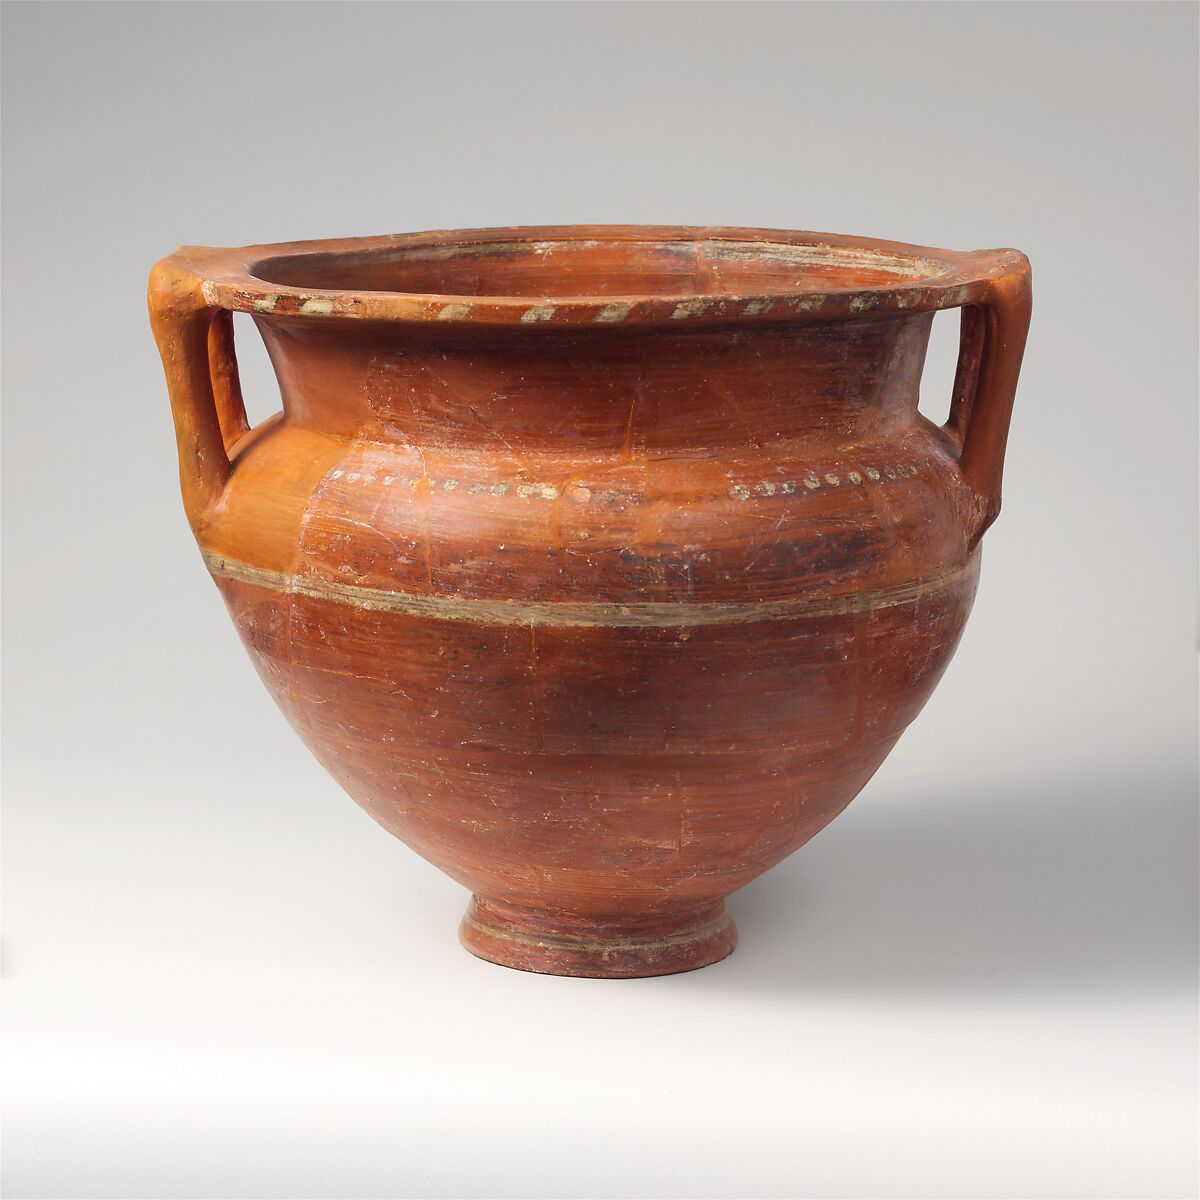 Terracotta krater (mixing bowl), Terracotta, Lydian 